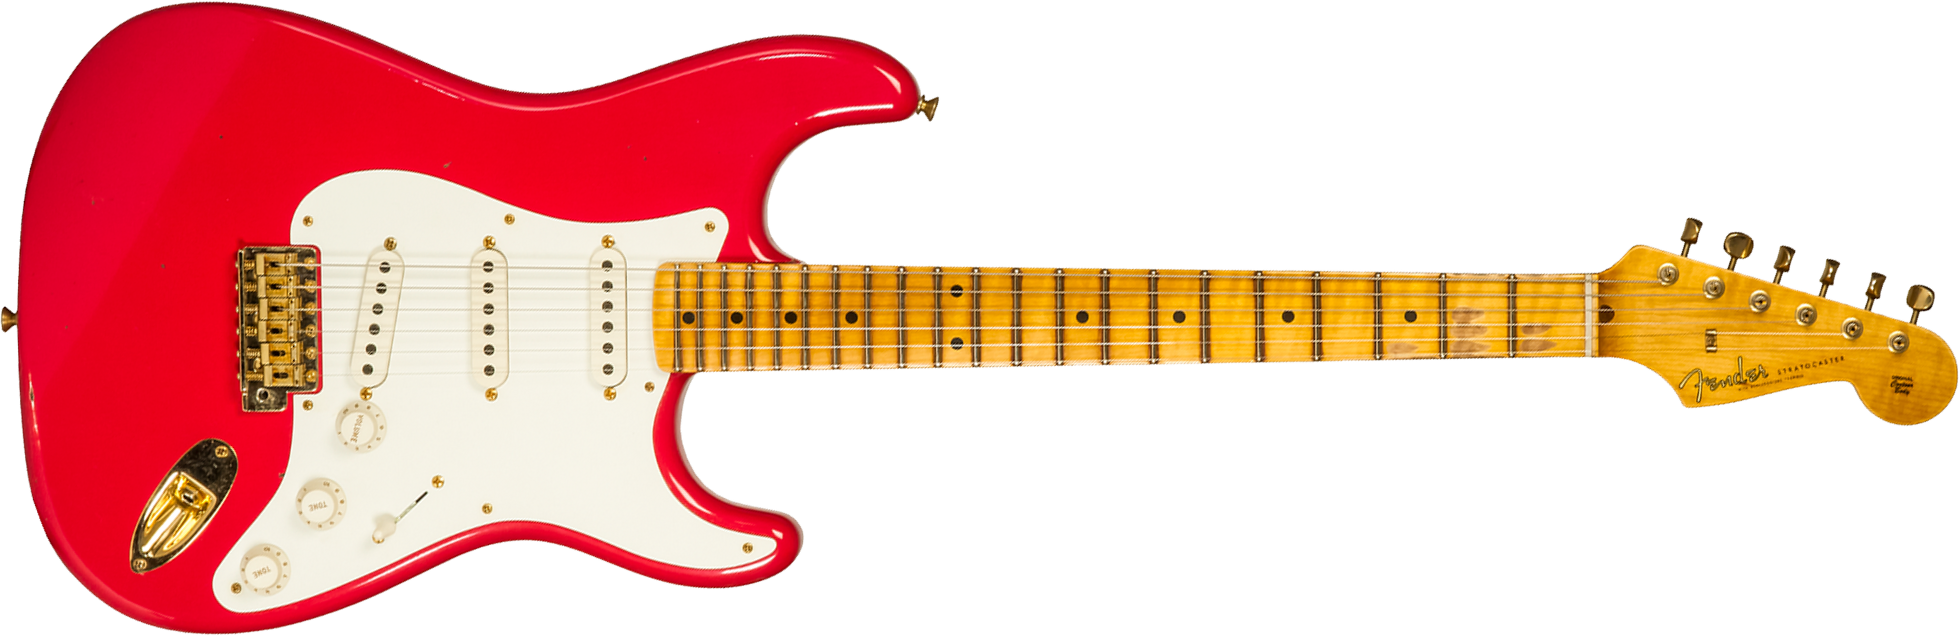 Fender Custom Shop Strat 1956 3s Trem Mn #r130433 - Journeyman Relic Fiesta Red - Guitarra eléctrica con forma de str. - Main picture